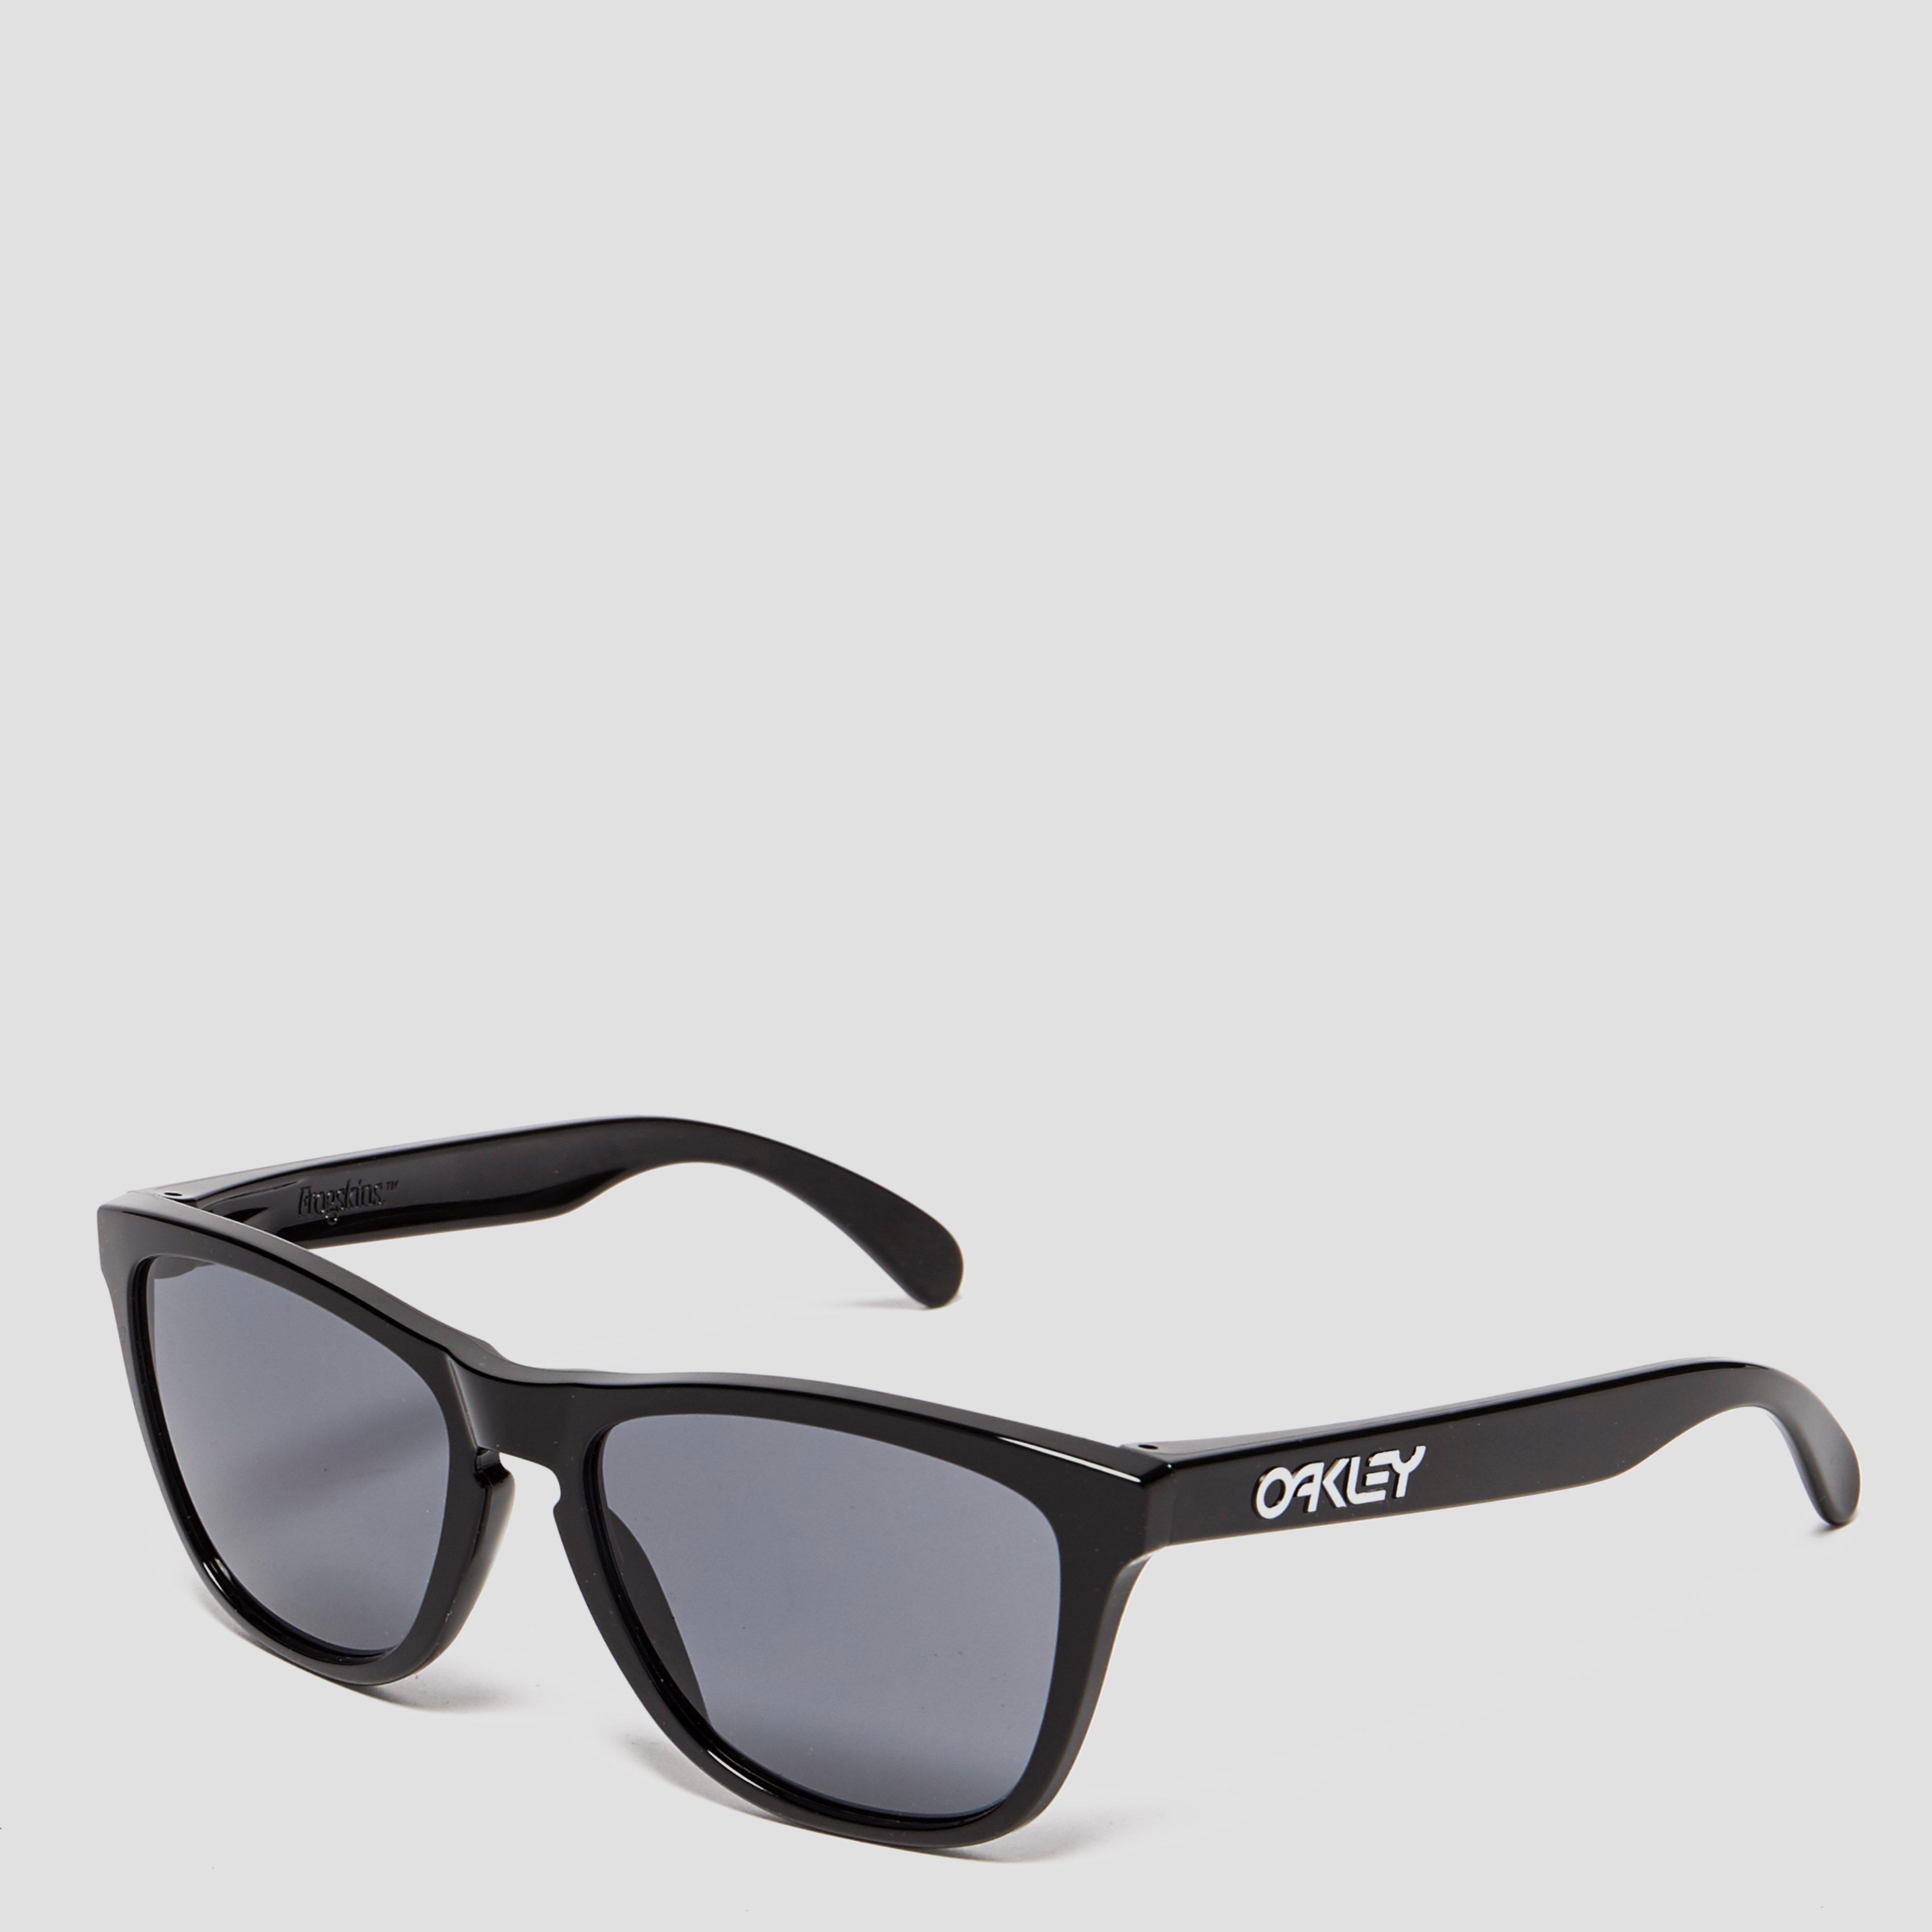 Oakley Frogskins Sunglasses  Black